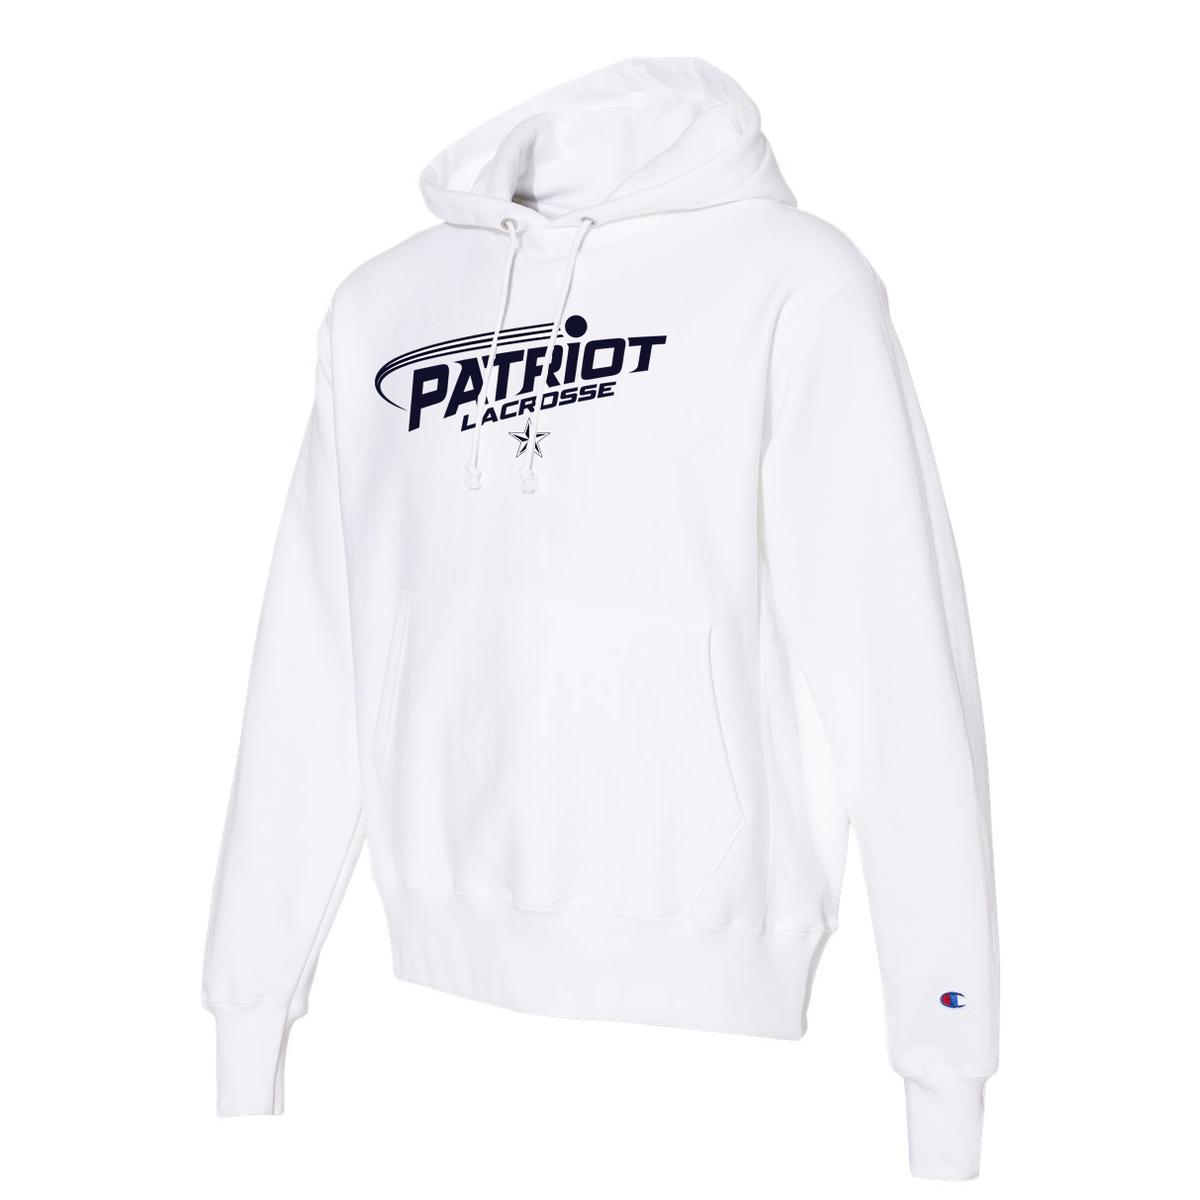 Patriot Lacrosse Champion Sweatshirt